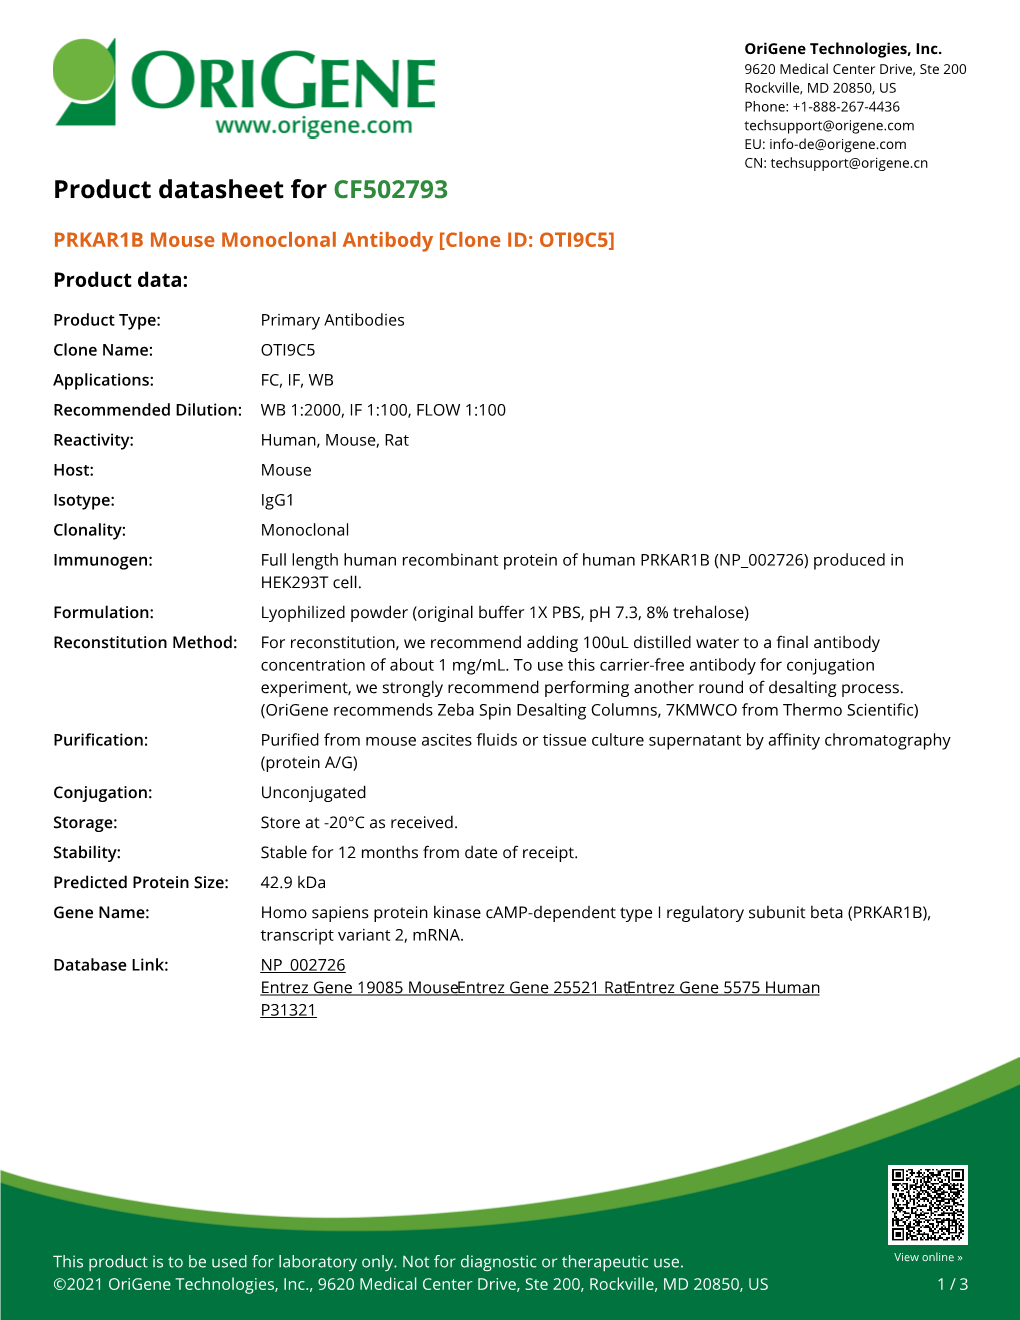 PRKAR1B Mouse Monoclonal Antibody [Clone ID: OTI9C5] Product Data